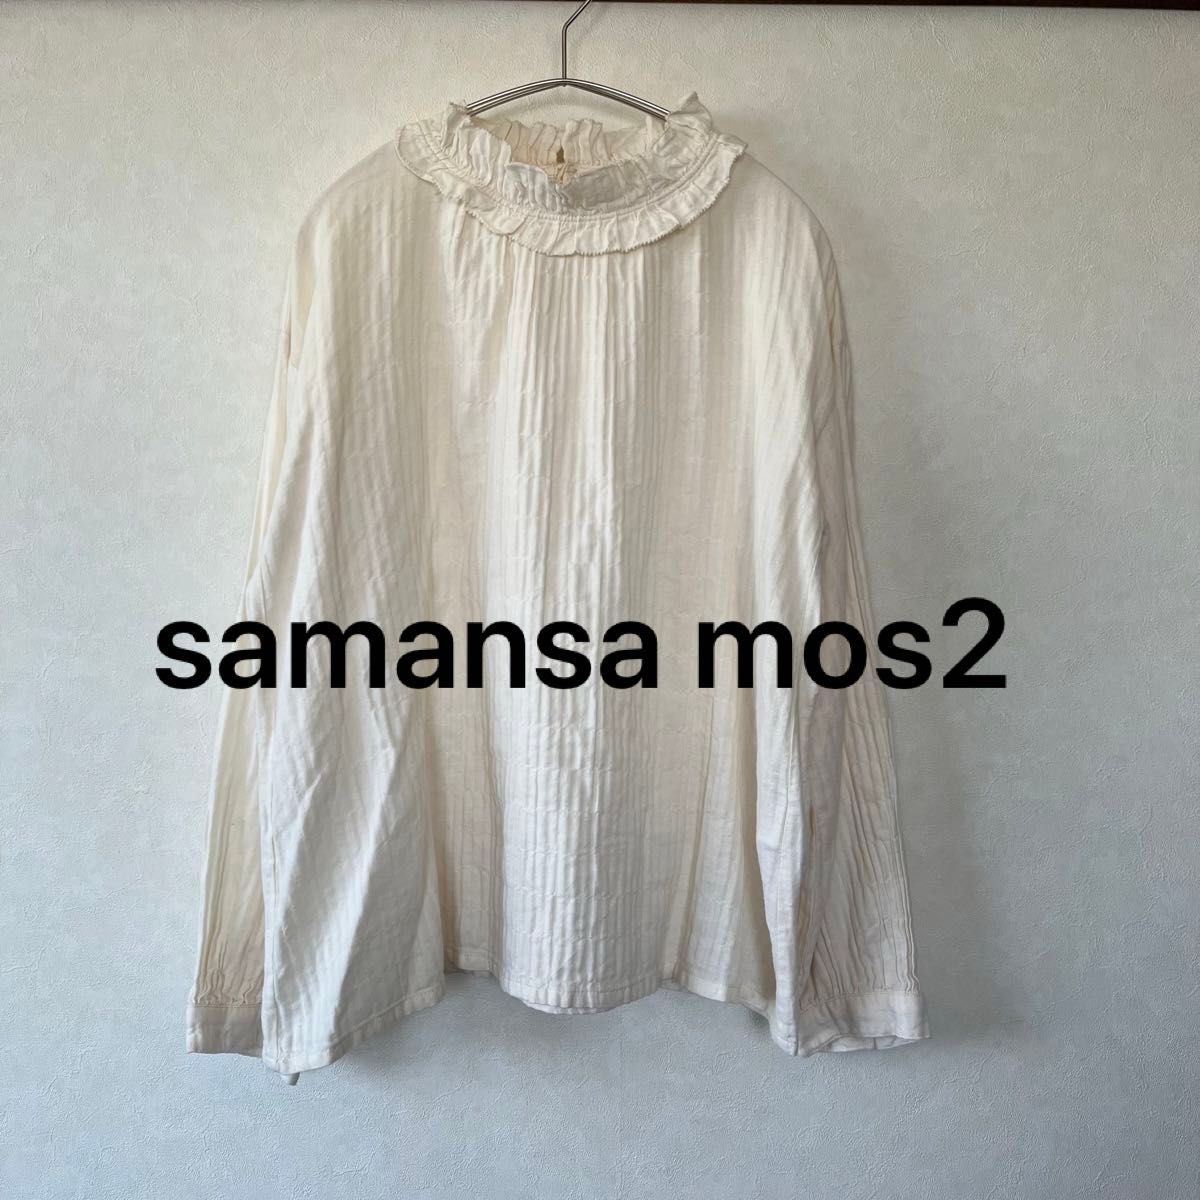 【samansa mos2 】 サマンサモスモス ホワイト 長袖 ブラウス ギャザーブラウス シャツ コットンブラウス